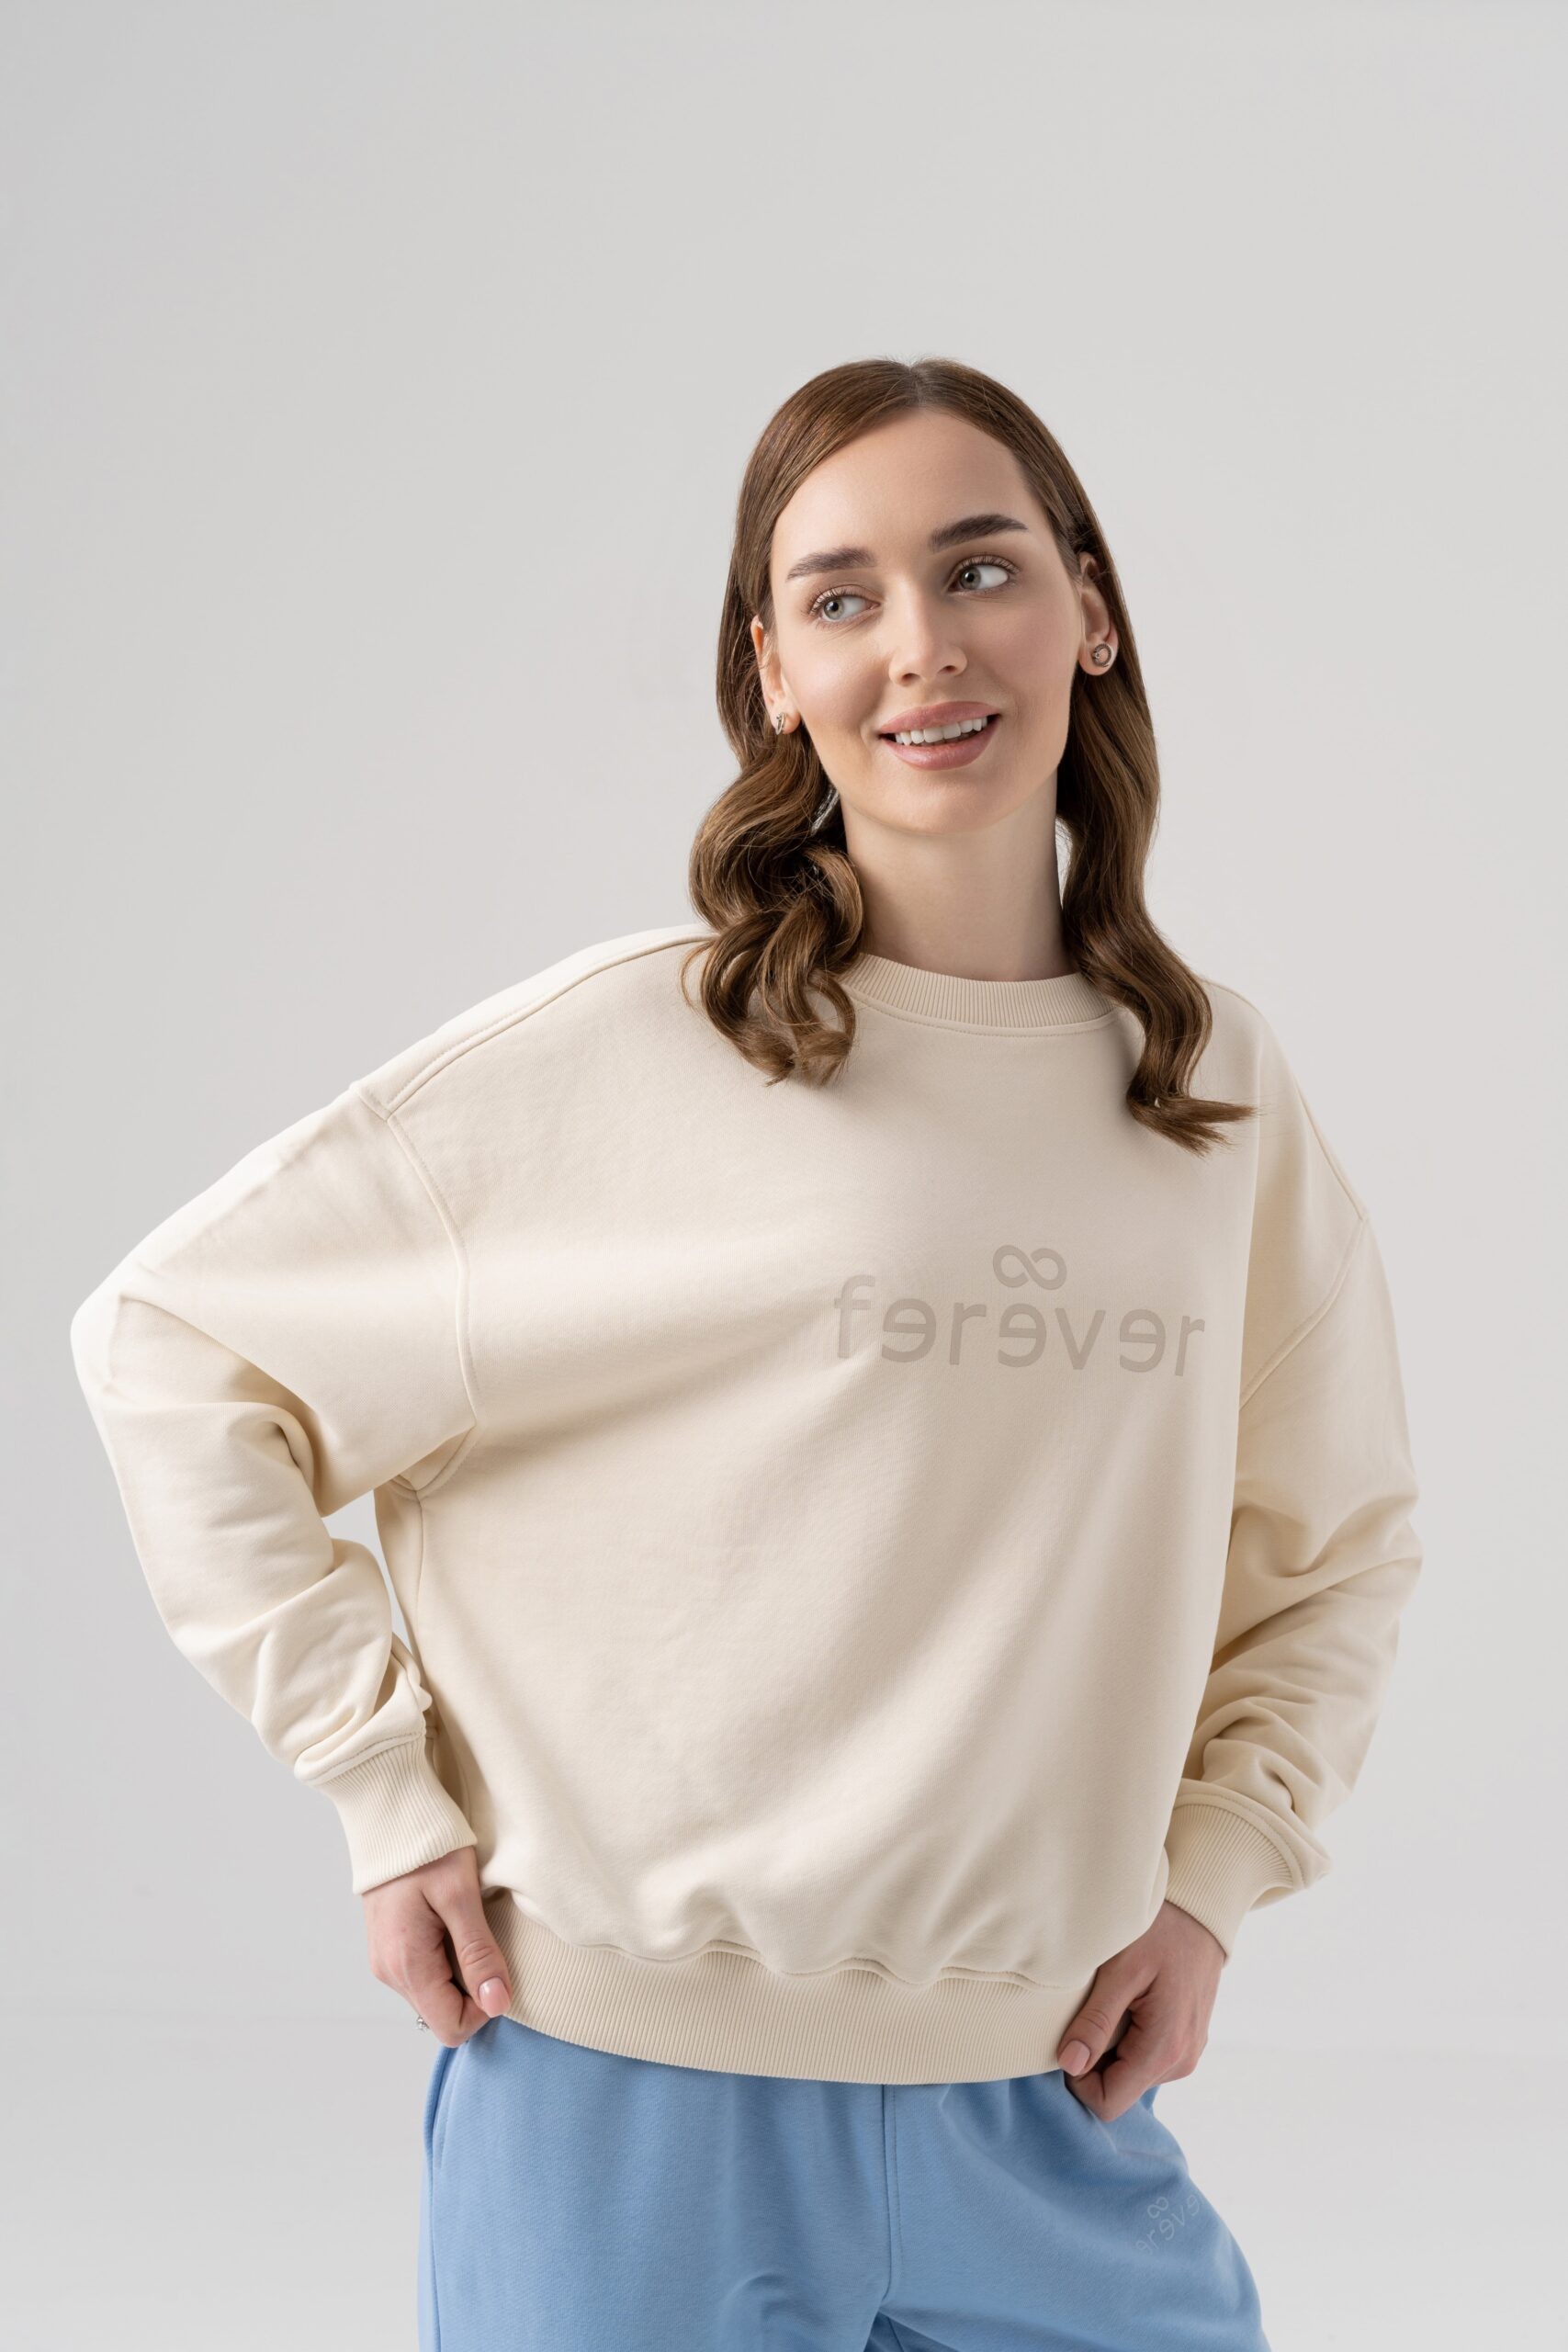 Frvr Unisex Oversize Sweatshirt - Bej